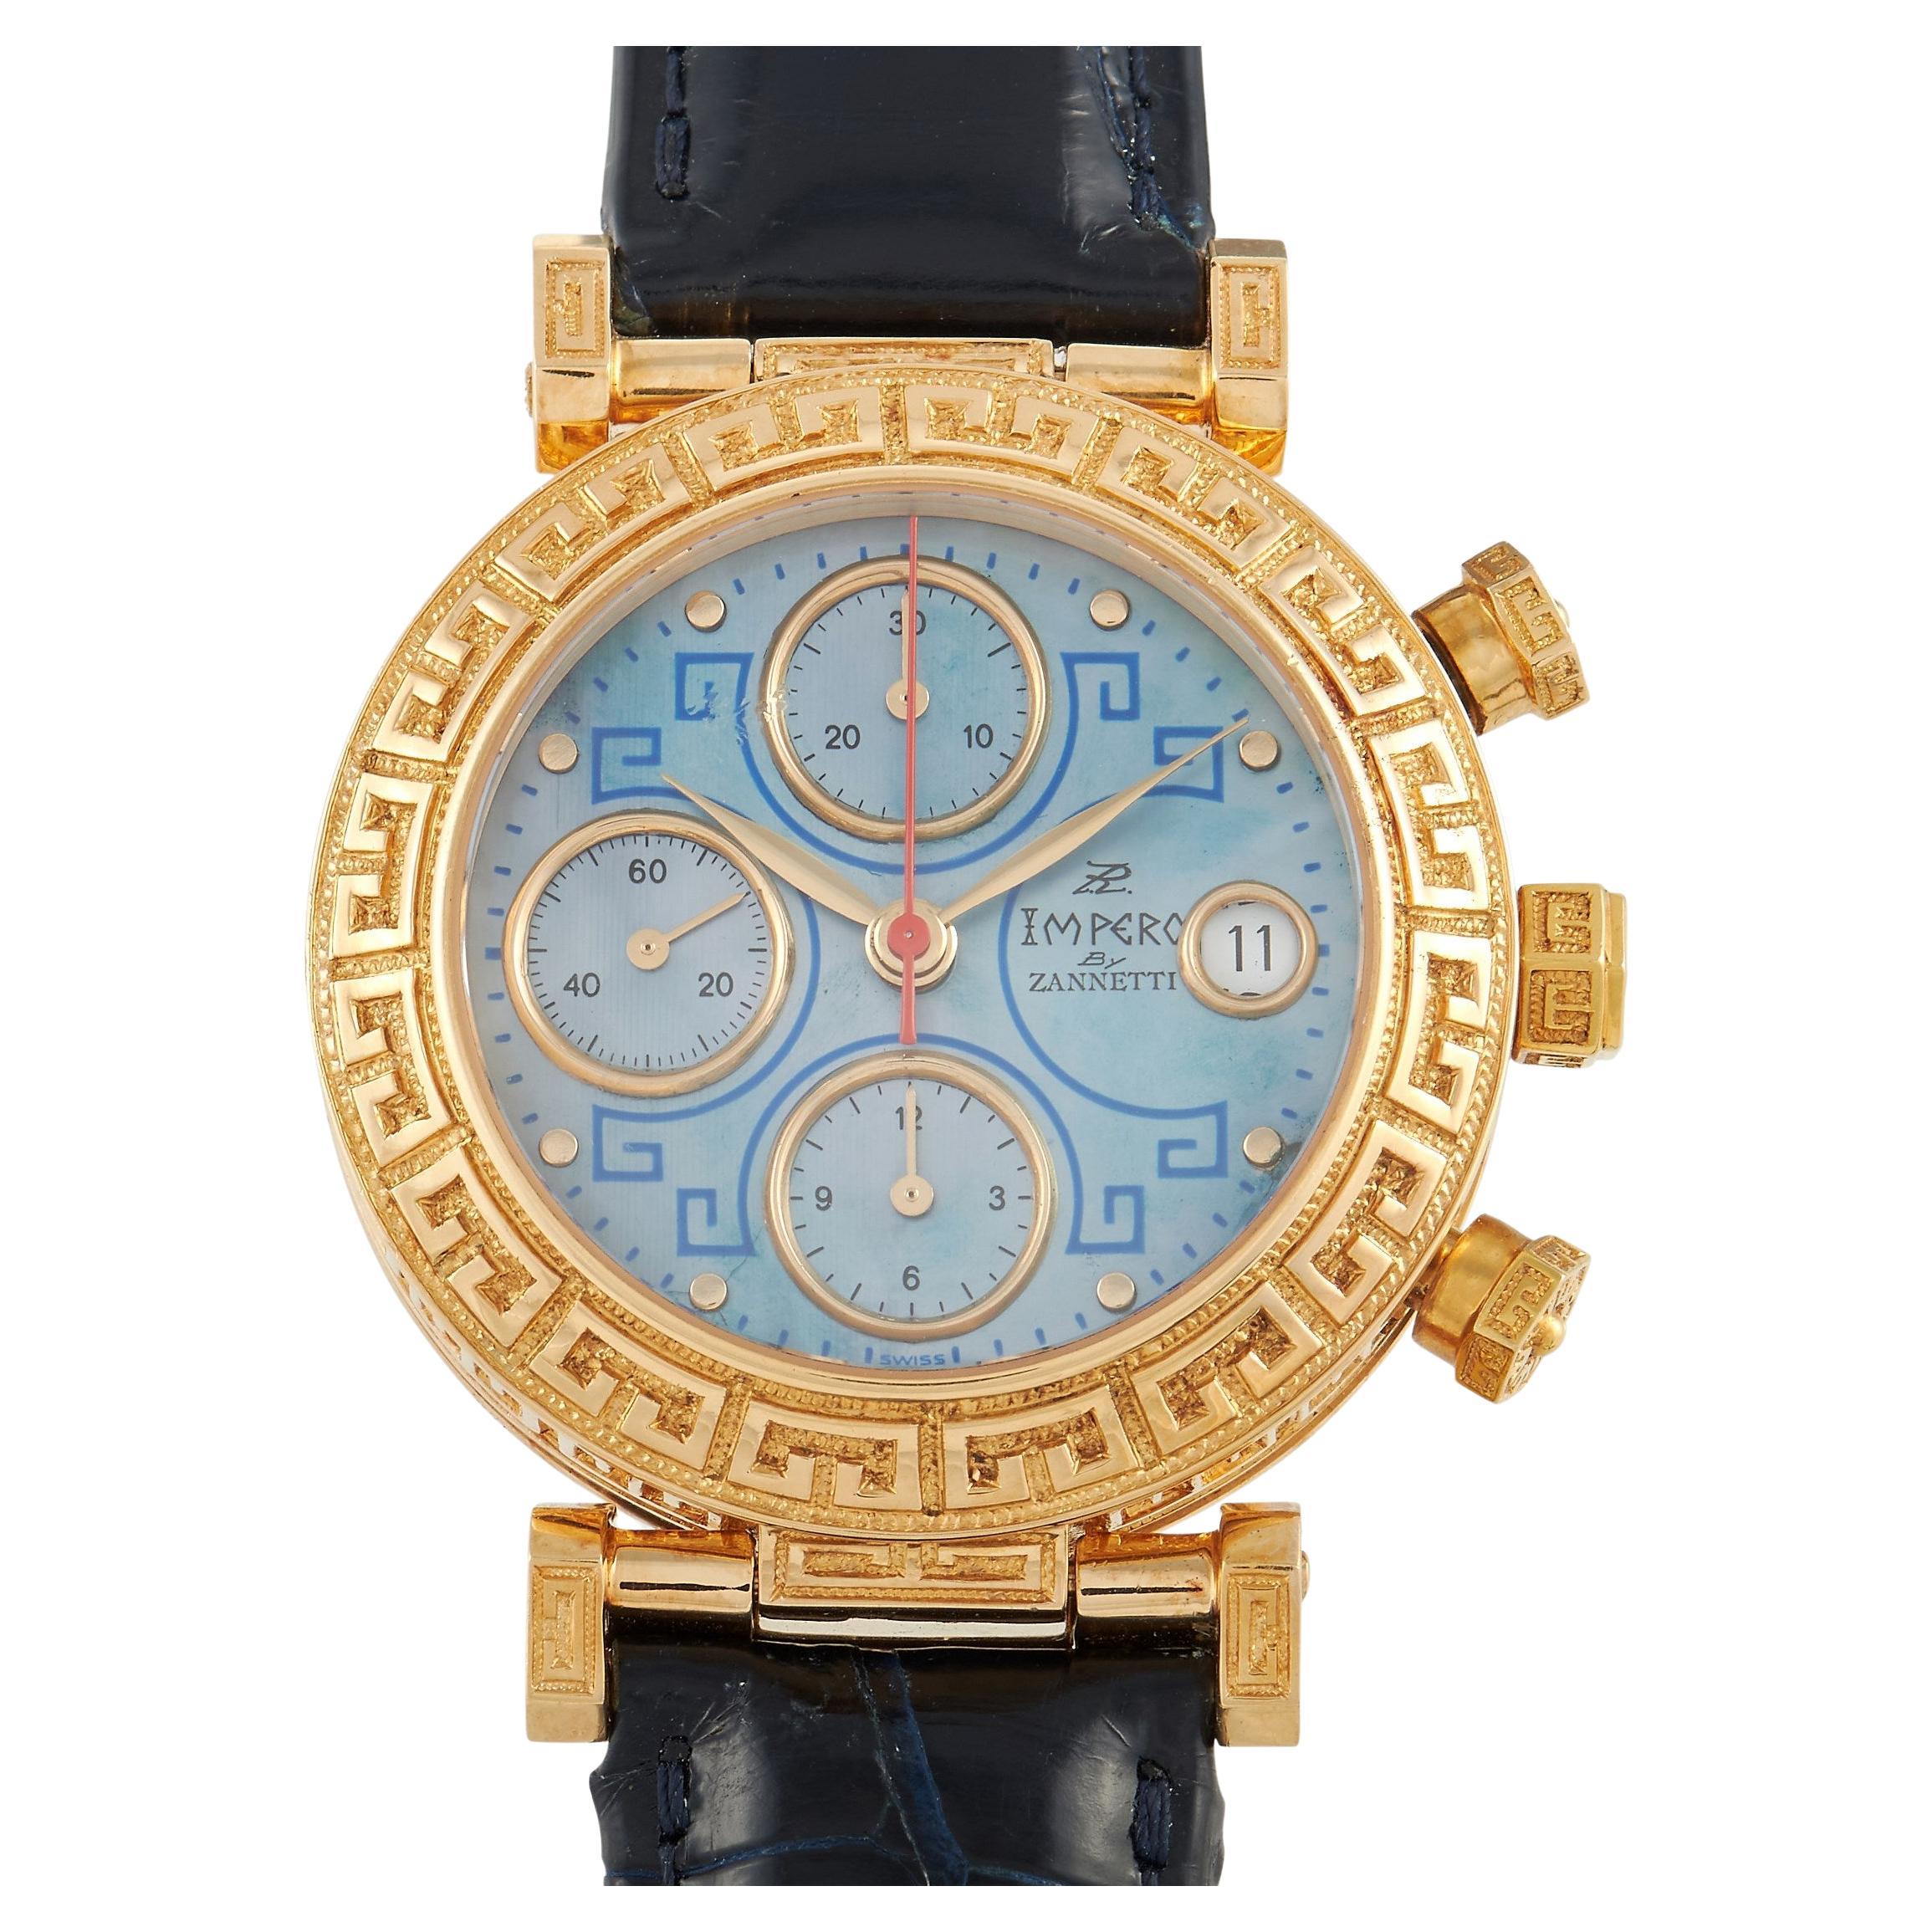 Zannetti Impero 18K Gold Chronograph Watch